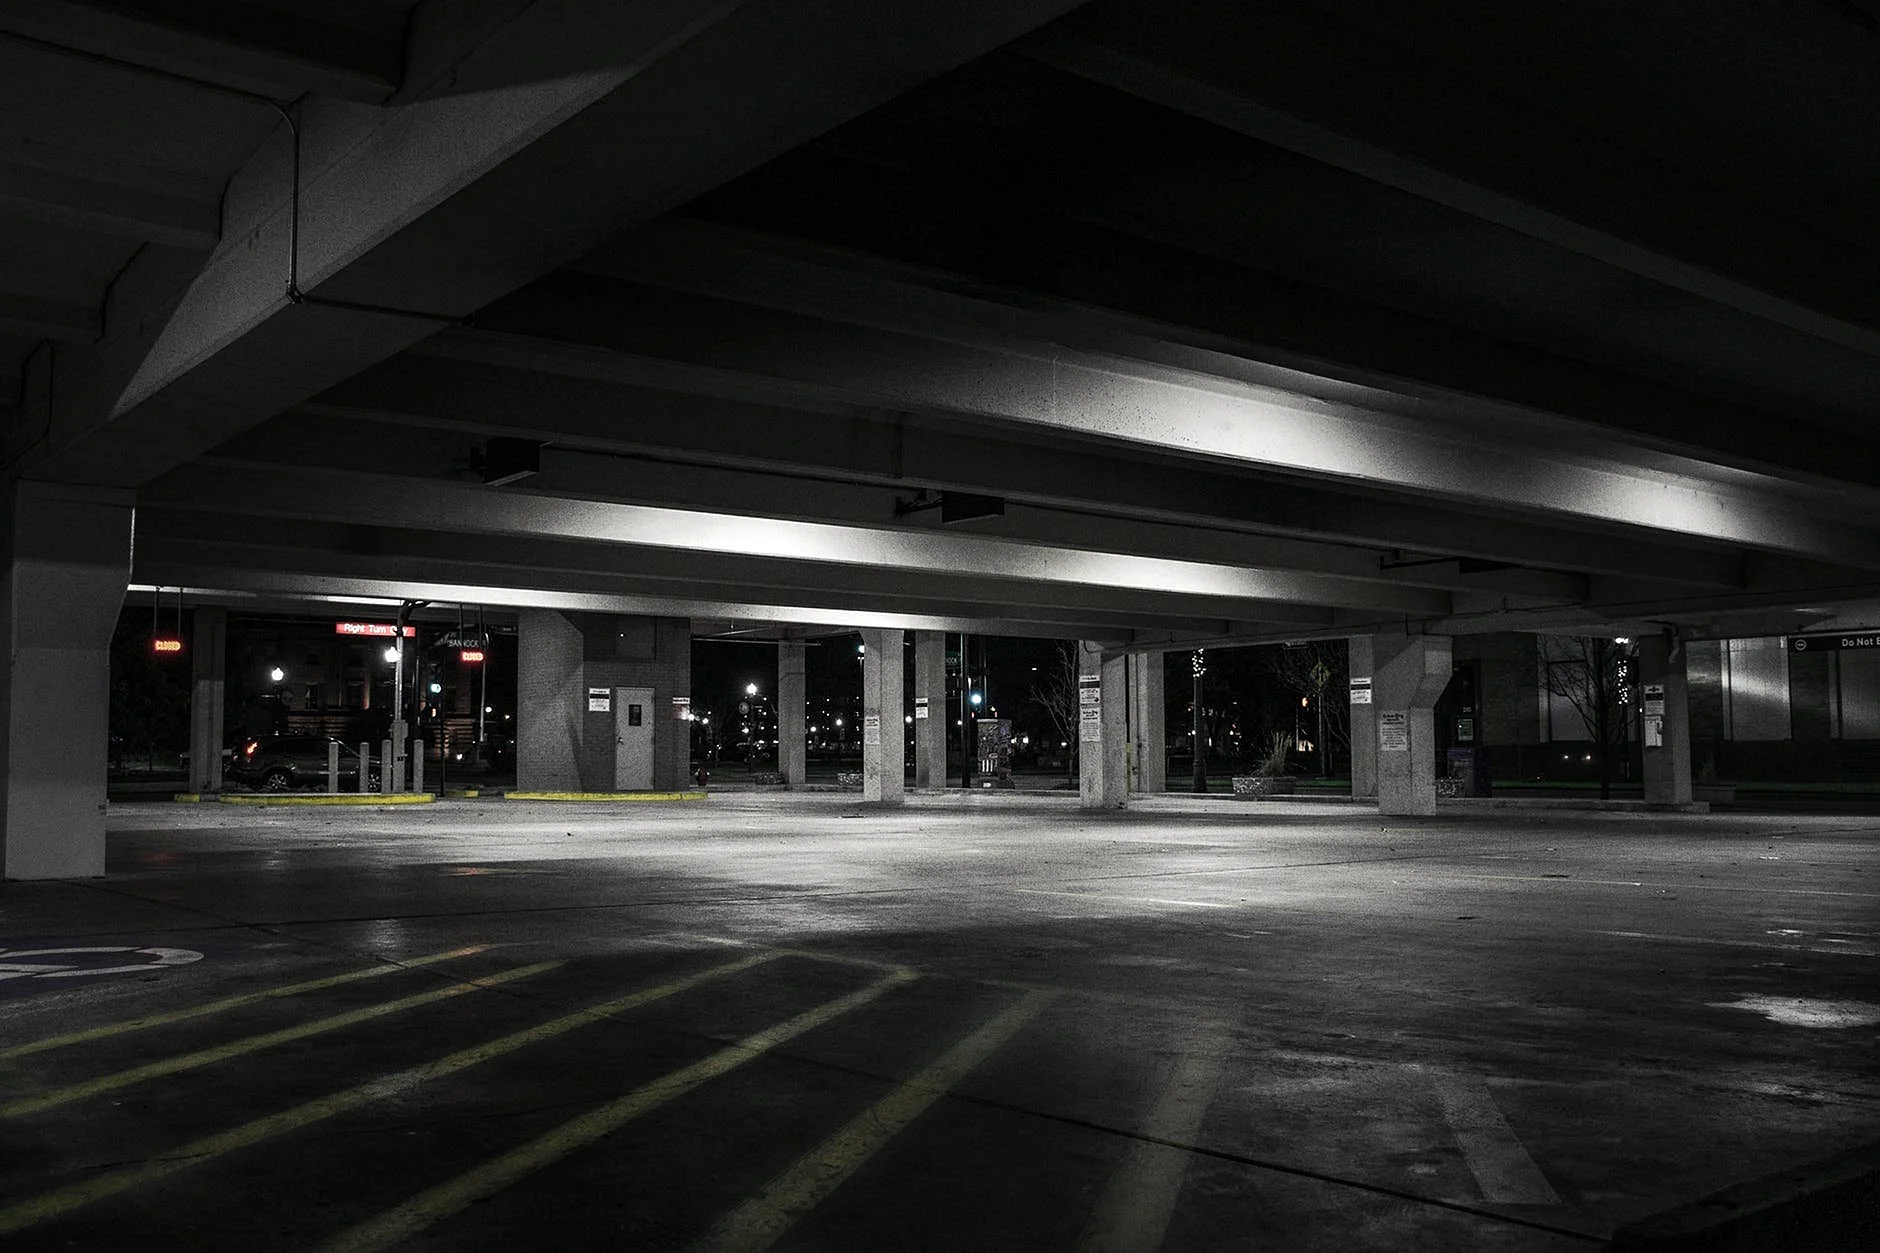 Подземная парковка